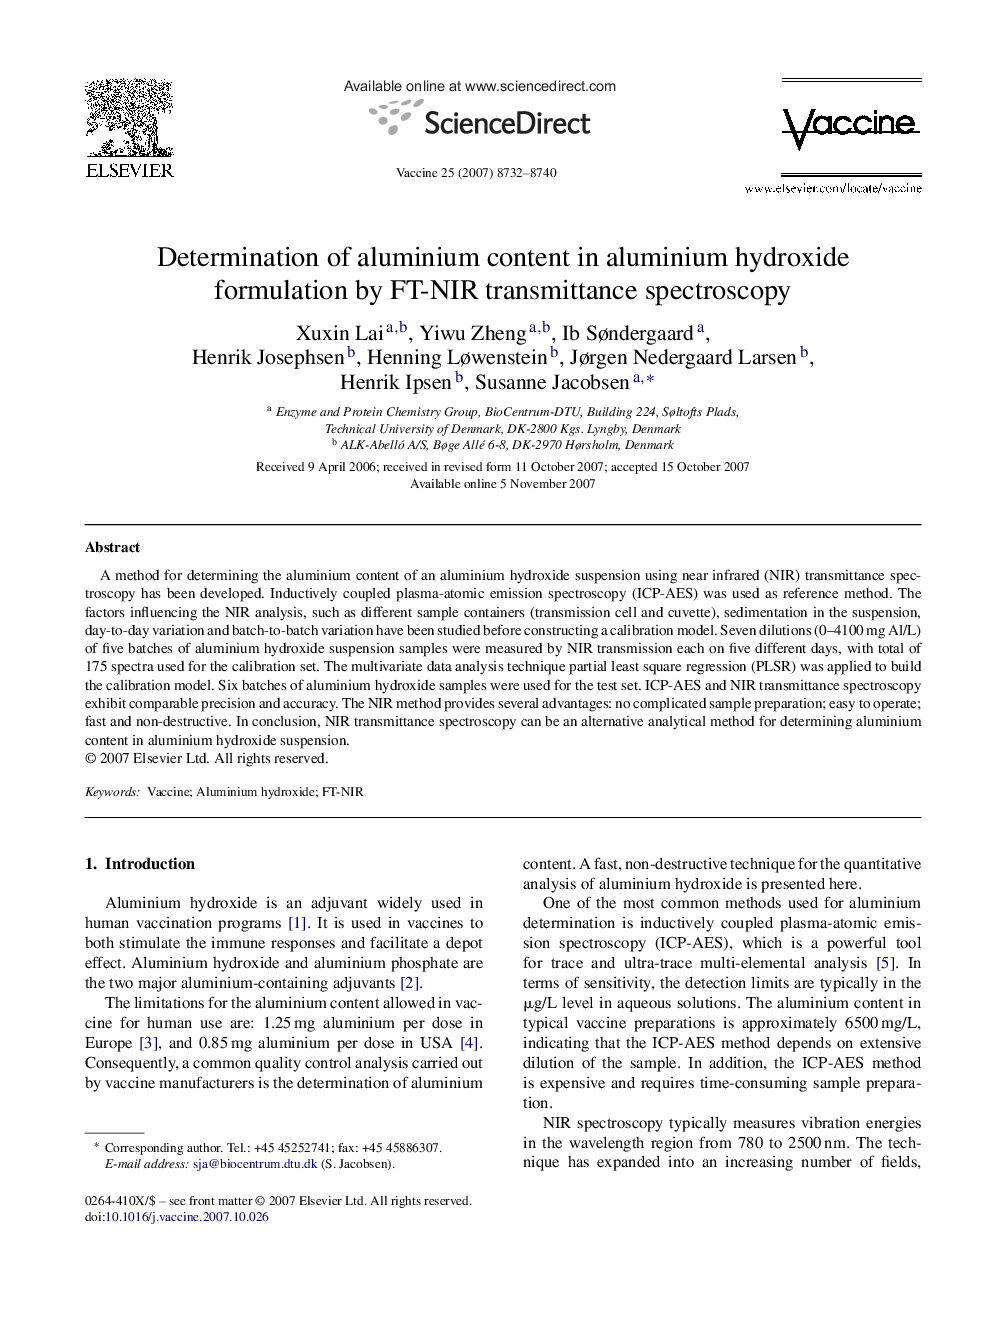 Determination of aluminium content in aluminium hydroxide formulation by FT-NIR transmittance spectroscopy